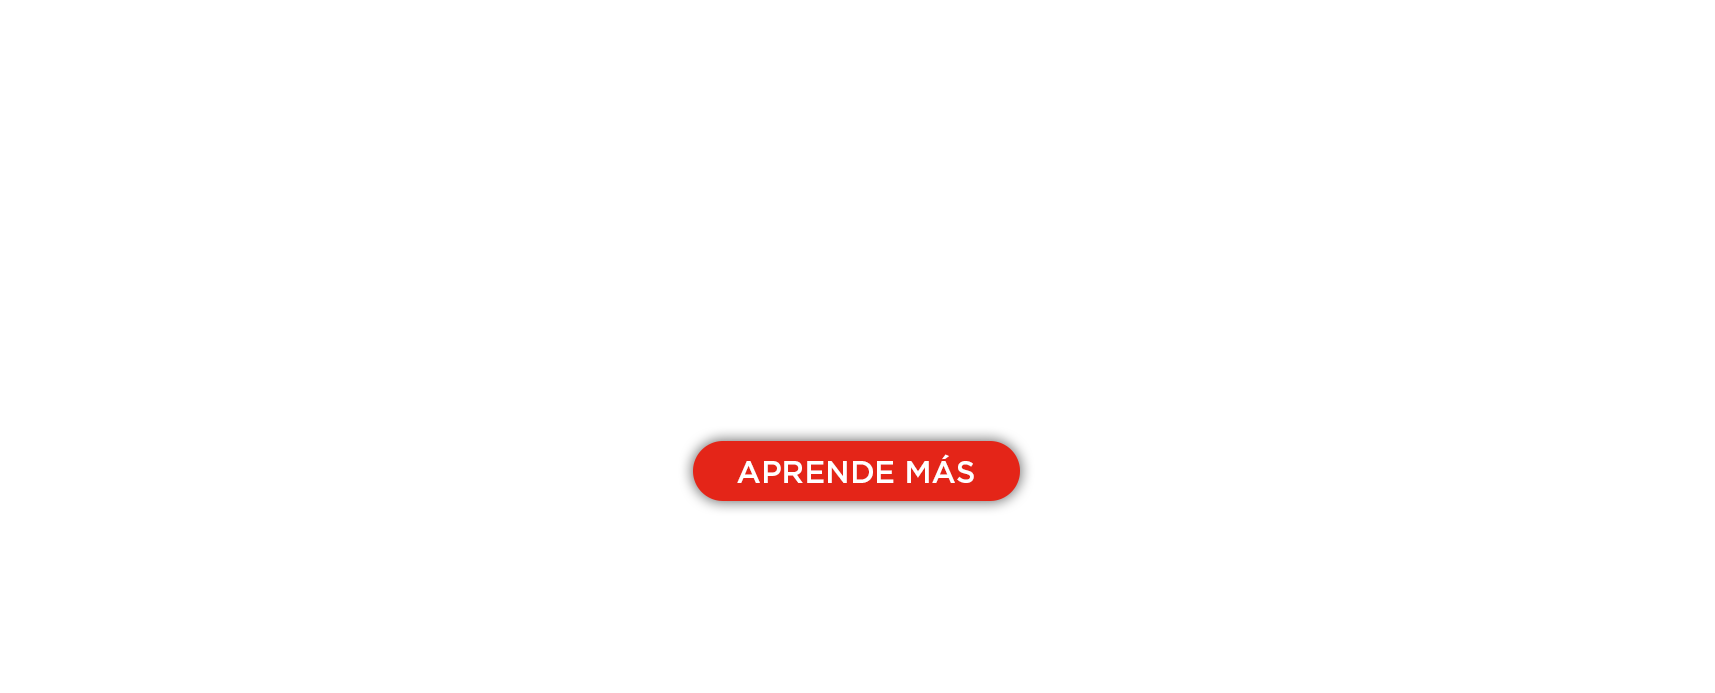 CompTIA Tech Career Academy tiene clases en línea a partir de marzo de 2022.